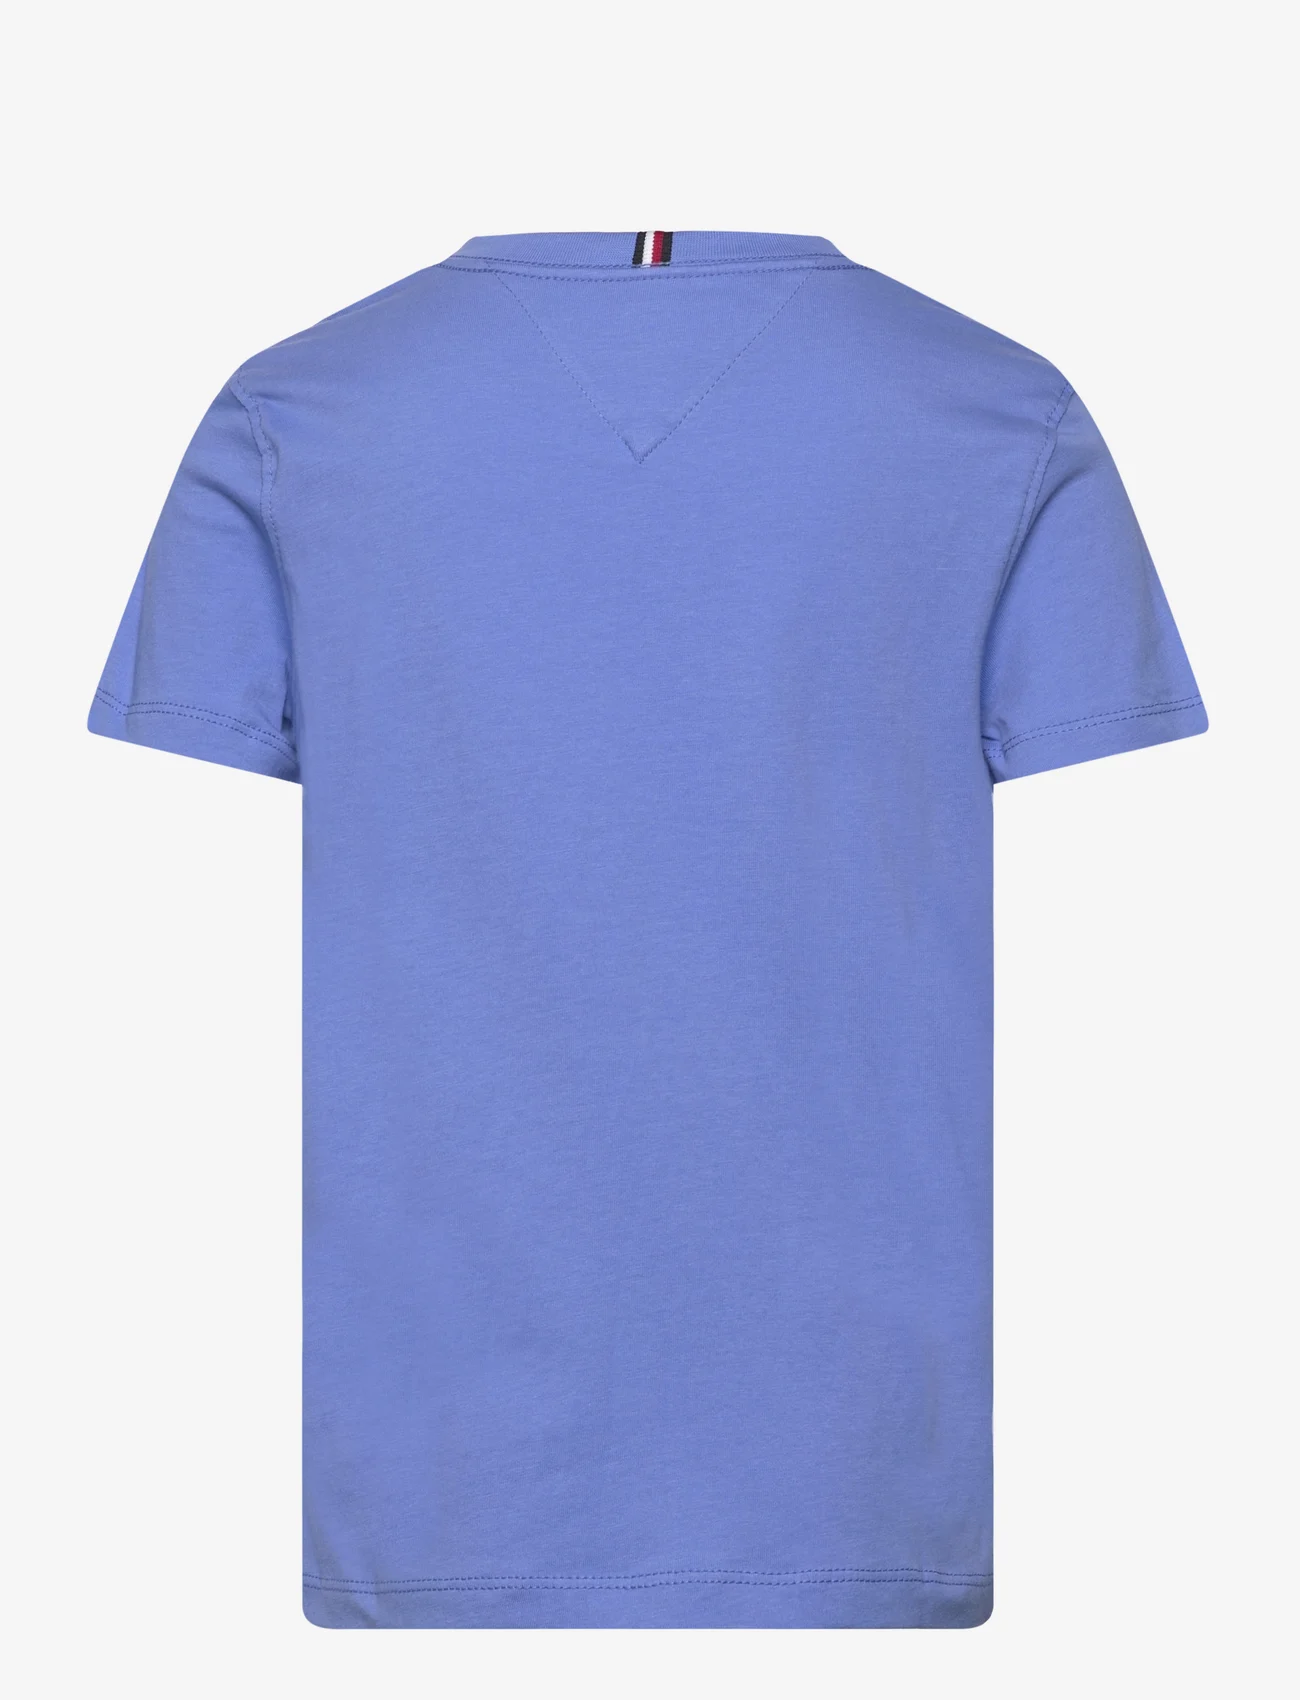 Tommy Hilfiger - ESSENTIAL COTTON TEE SS - kortärmade t-shirts - blue spell - 1